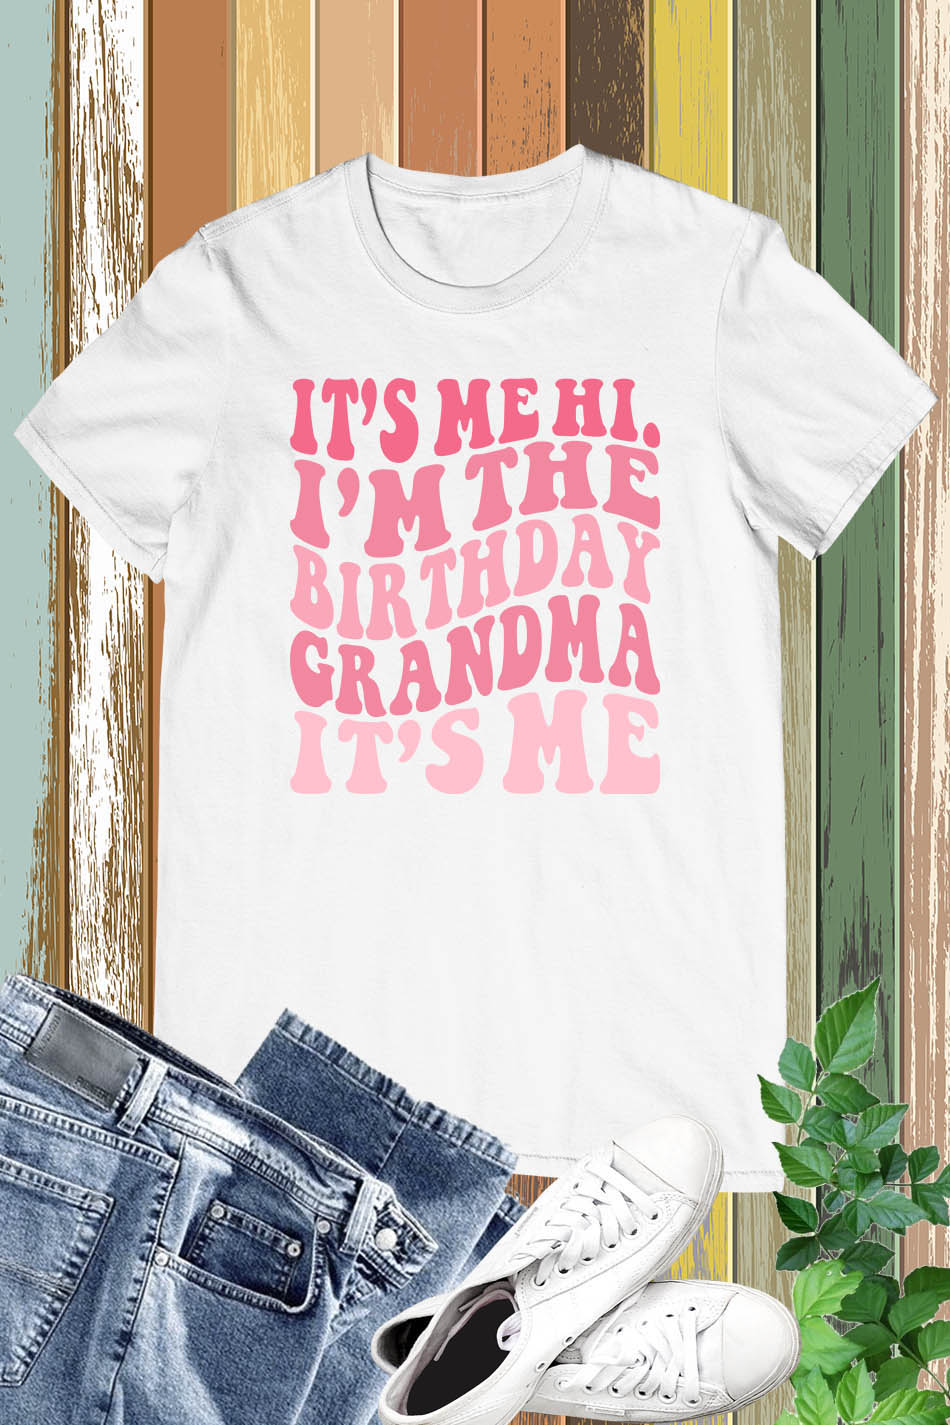 It's Me hi I'm The Birthday Grandma It's Me Shirt